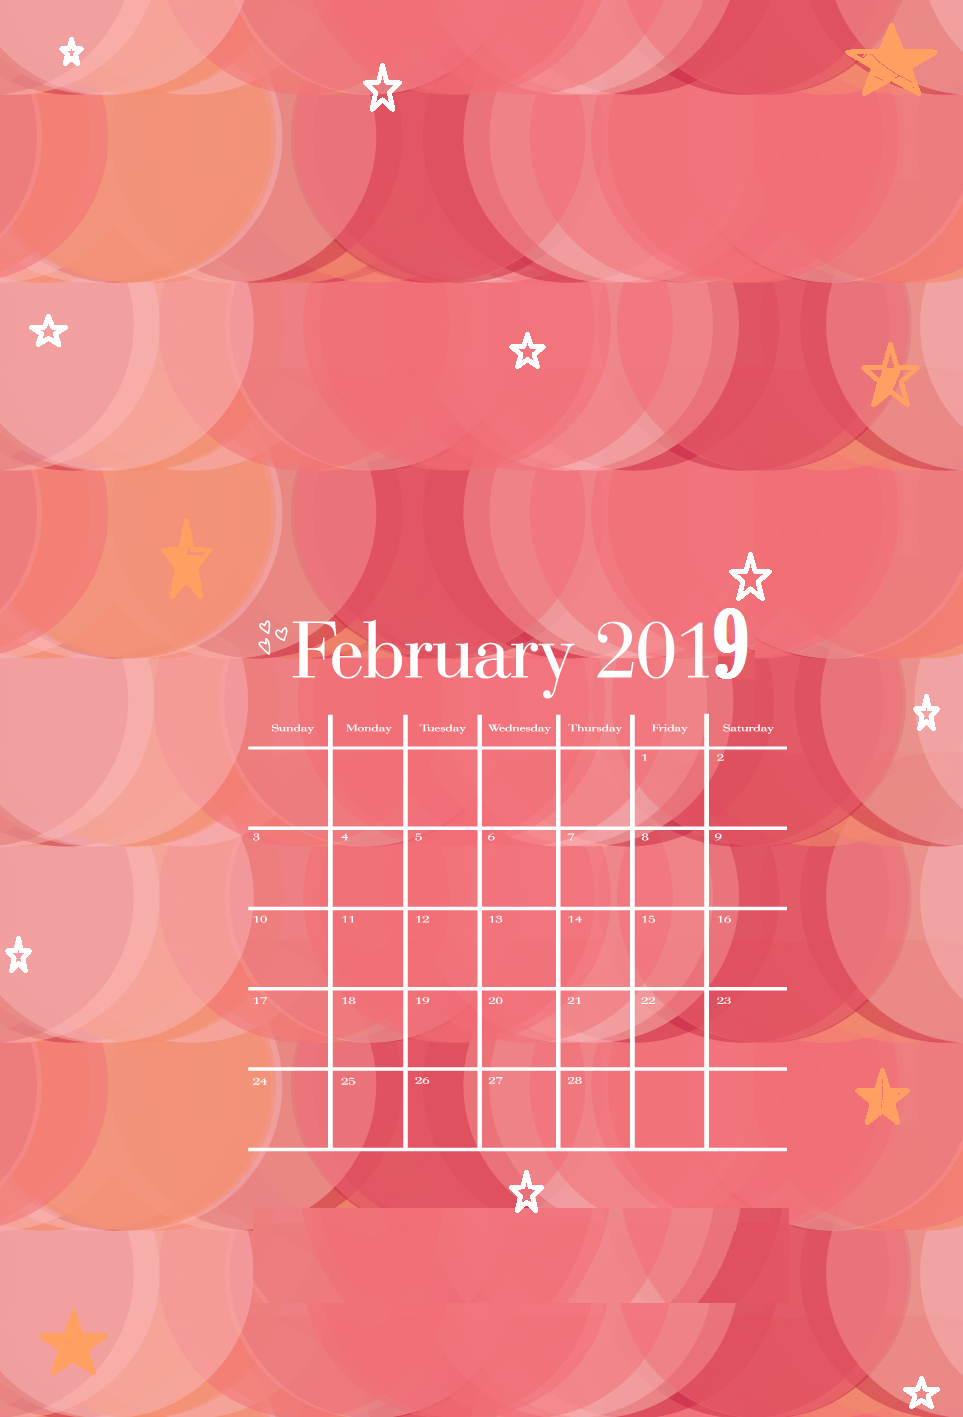 February 2019 iPhone Calendar Wallpapers